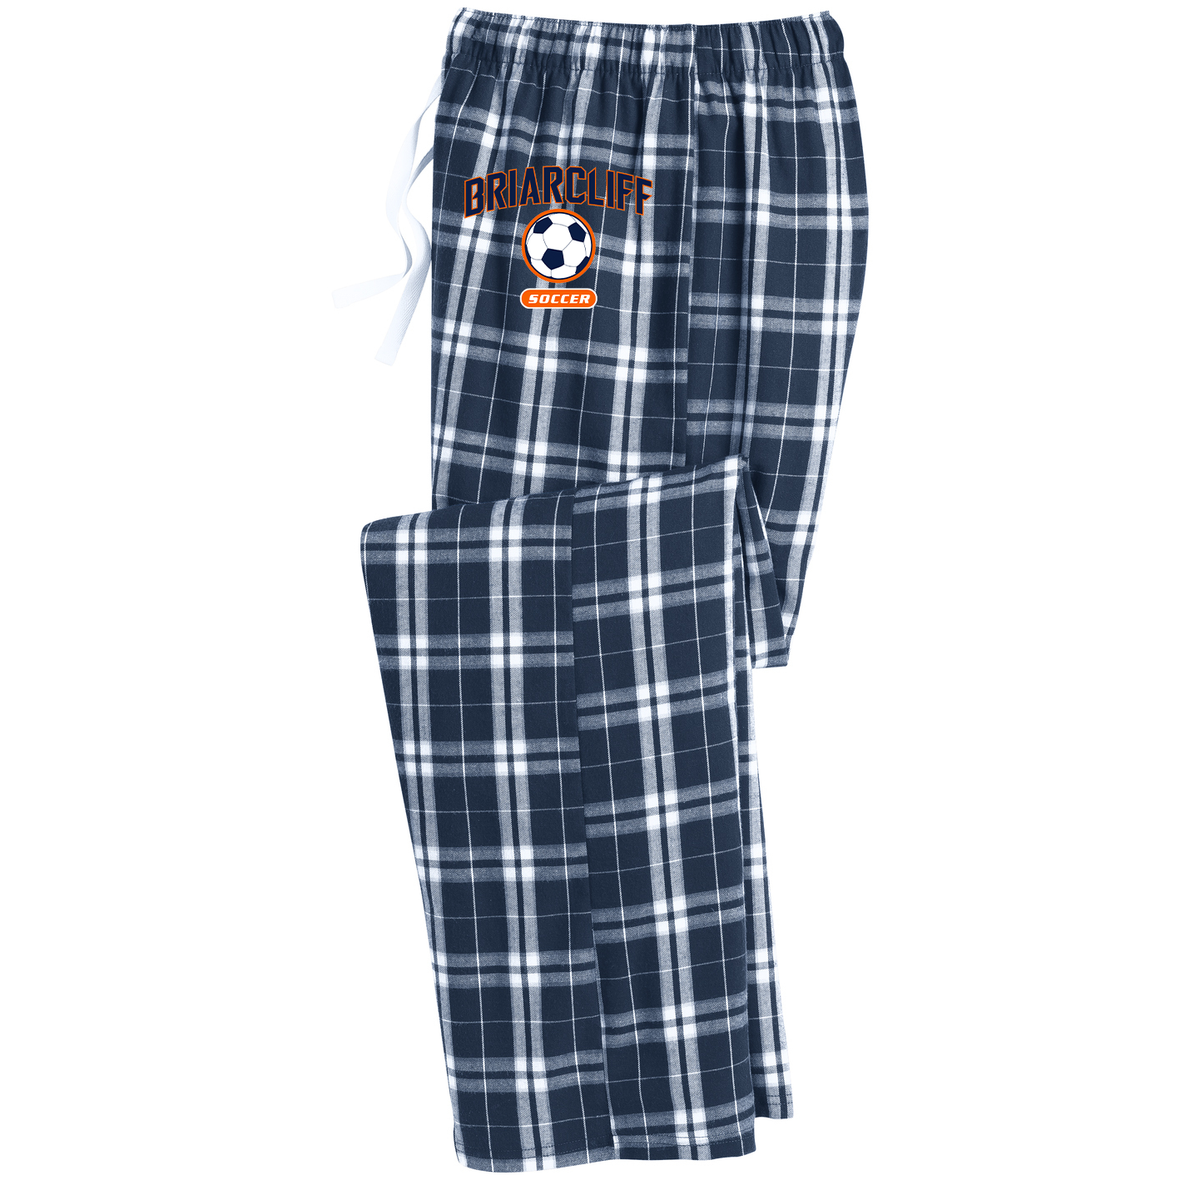 Briarcliff Soccer Plaid Pajama Pants